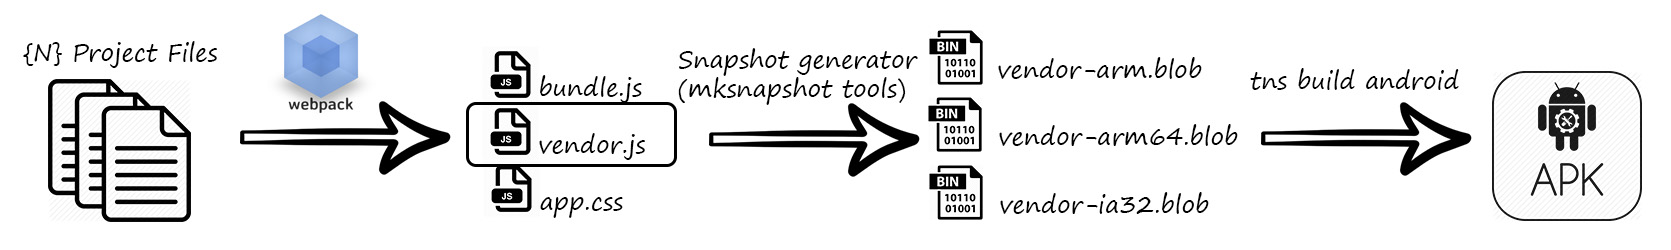 Snapshot generation process diagram